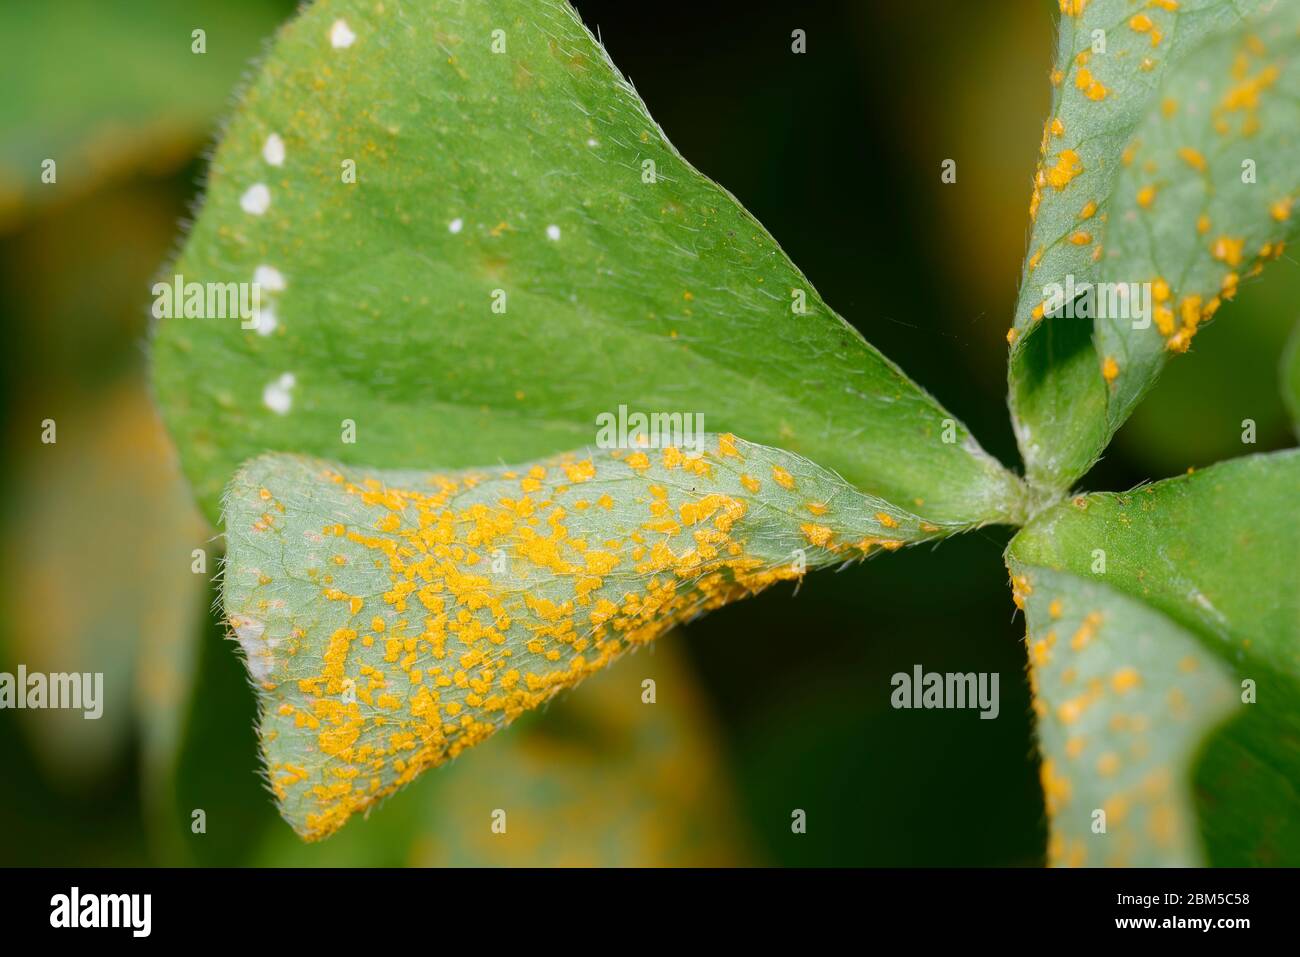 Sorrel or Oxalis Rust Fungus - Puccinia oxalidis  on underside of leaf of Pink Sorrel - Oxalis articulata Stock Photo